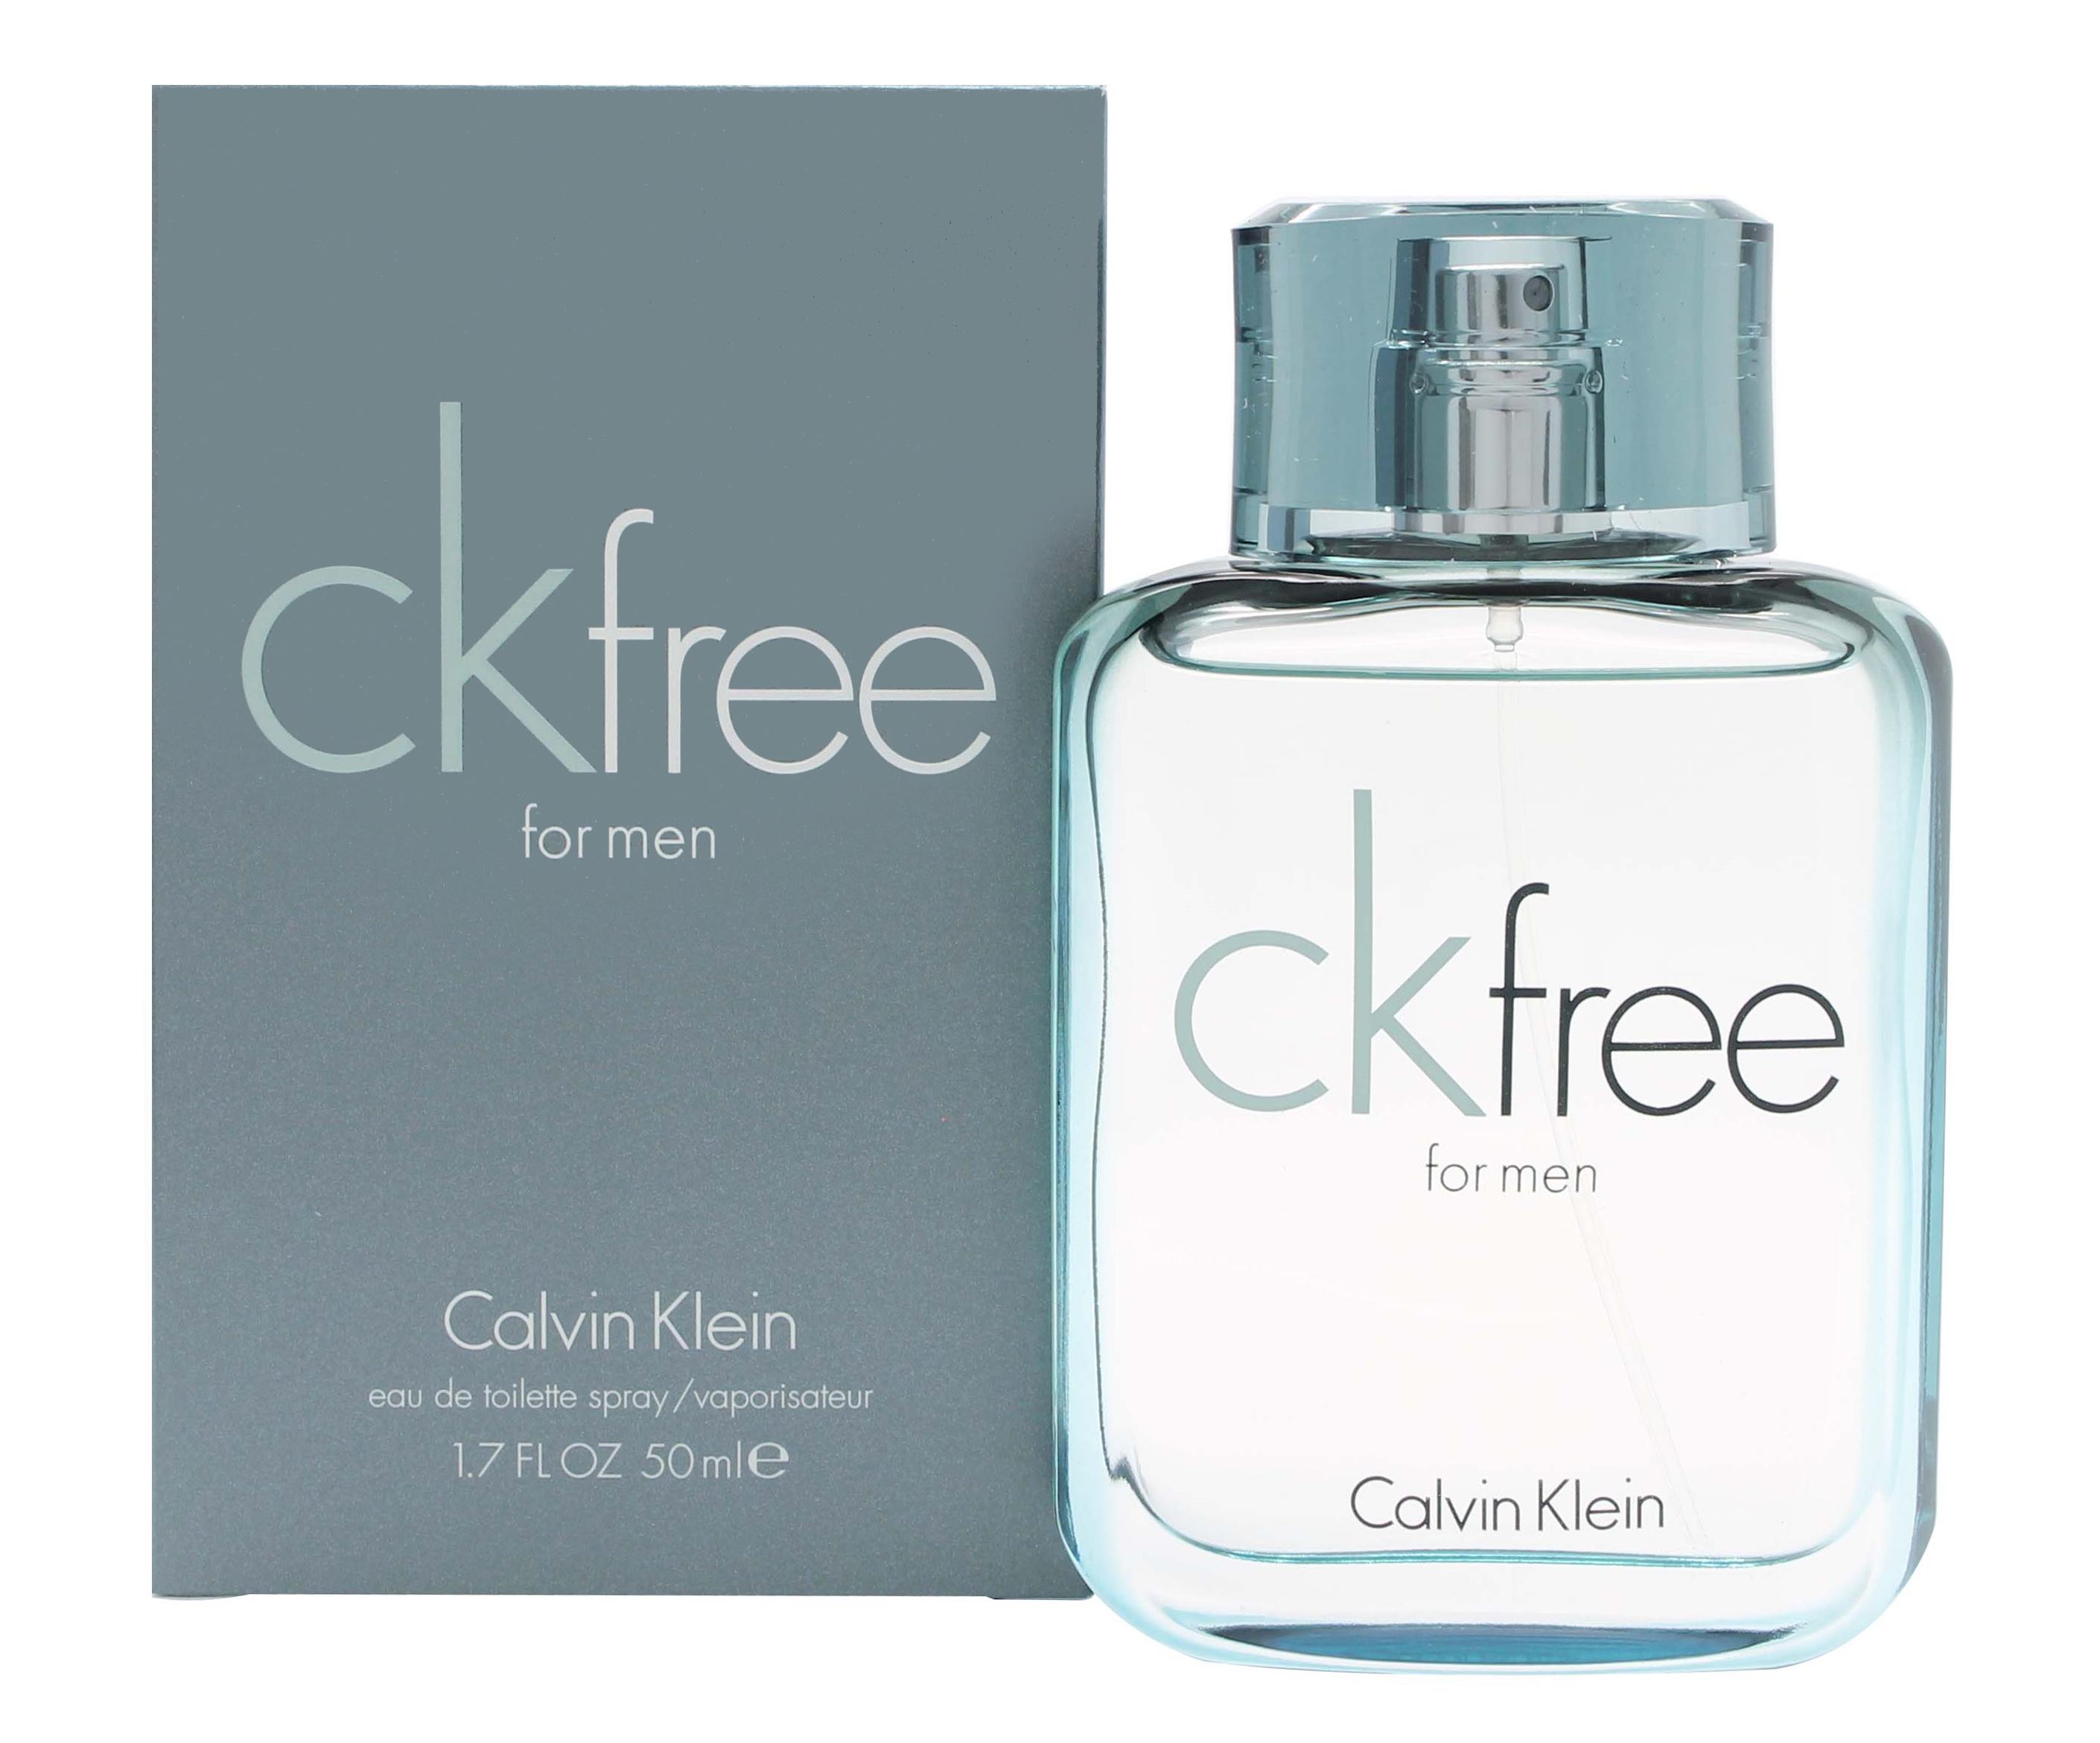 Calvin Klein CK Free Eau De Toilette 50ml Spray